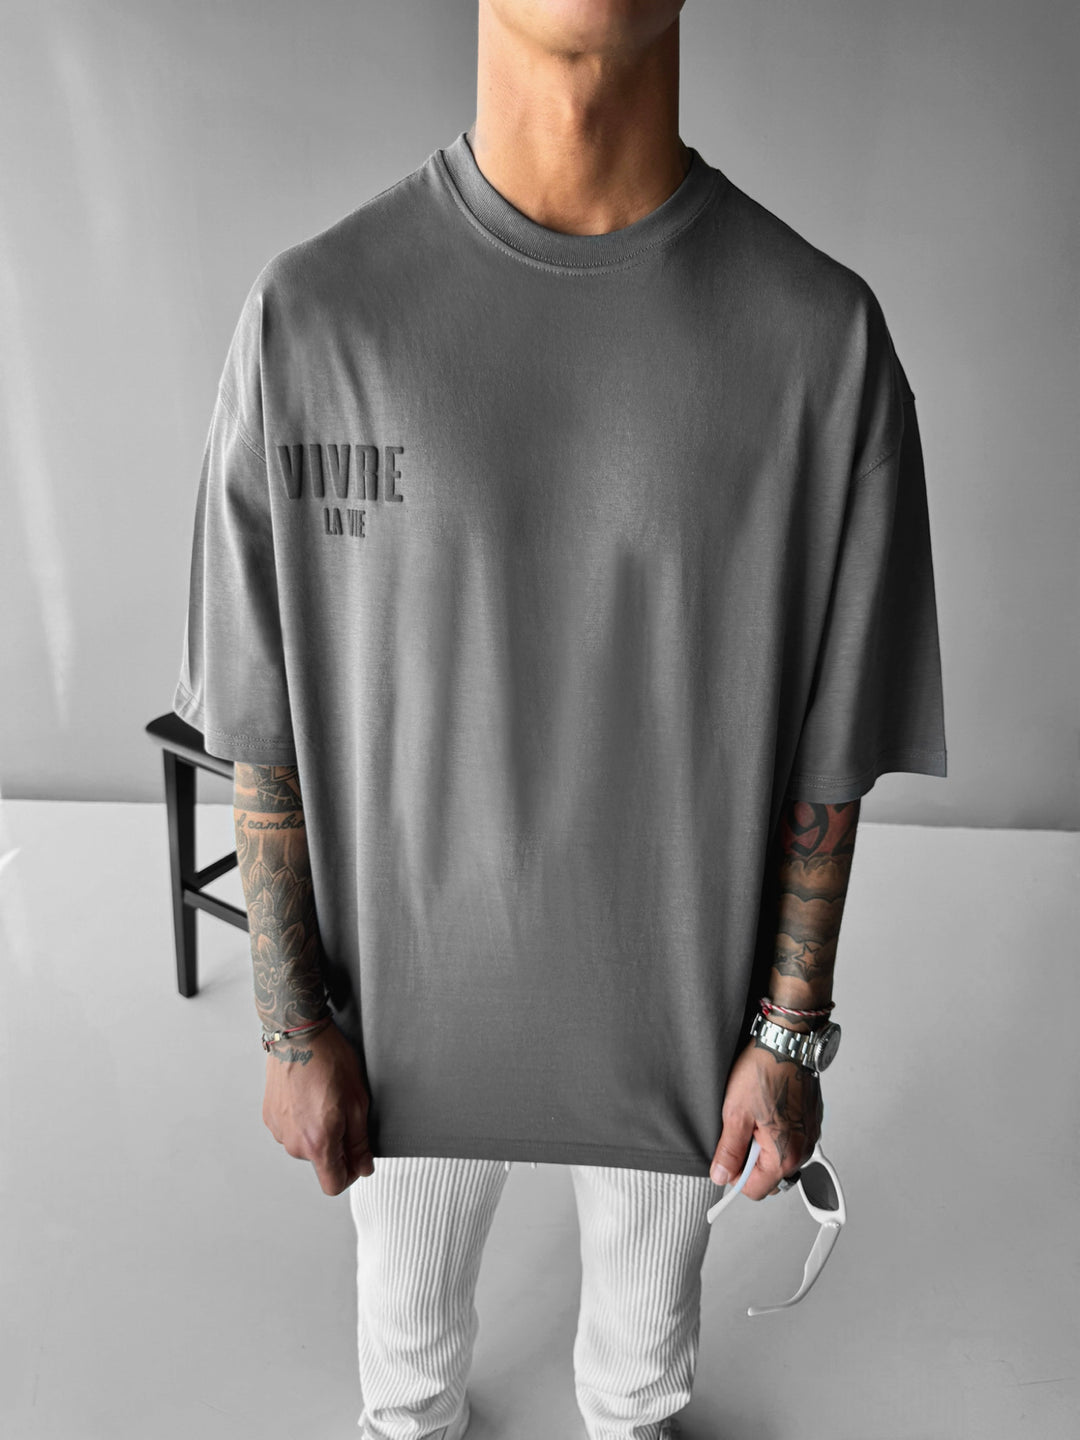 Oversize Vivre la Vie T-shirt - Anthracite and Black